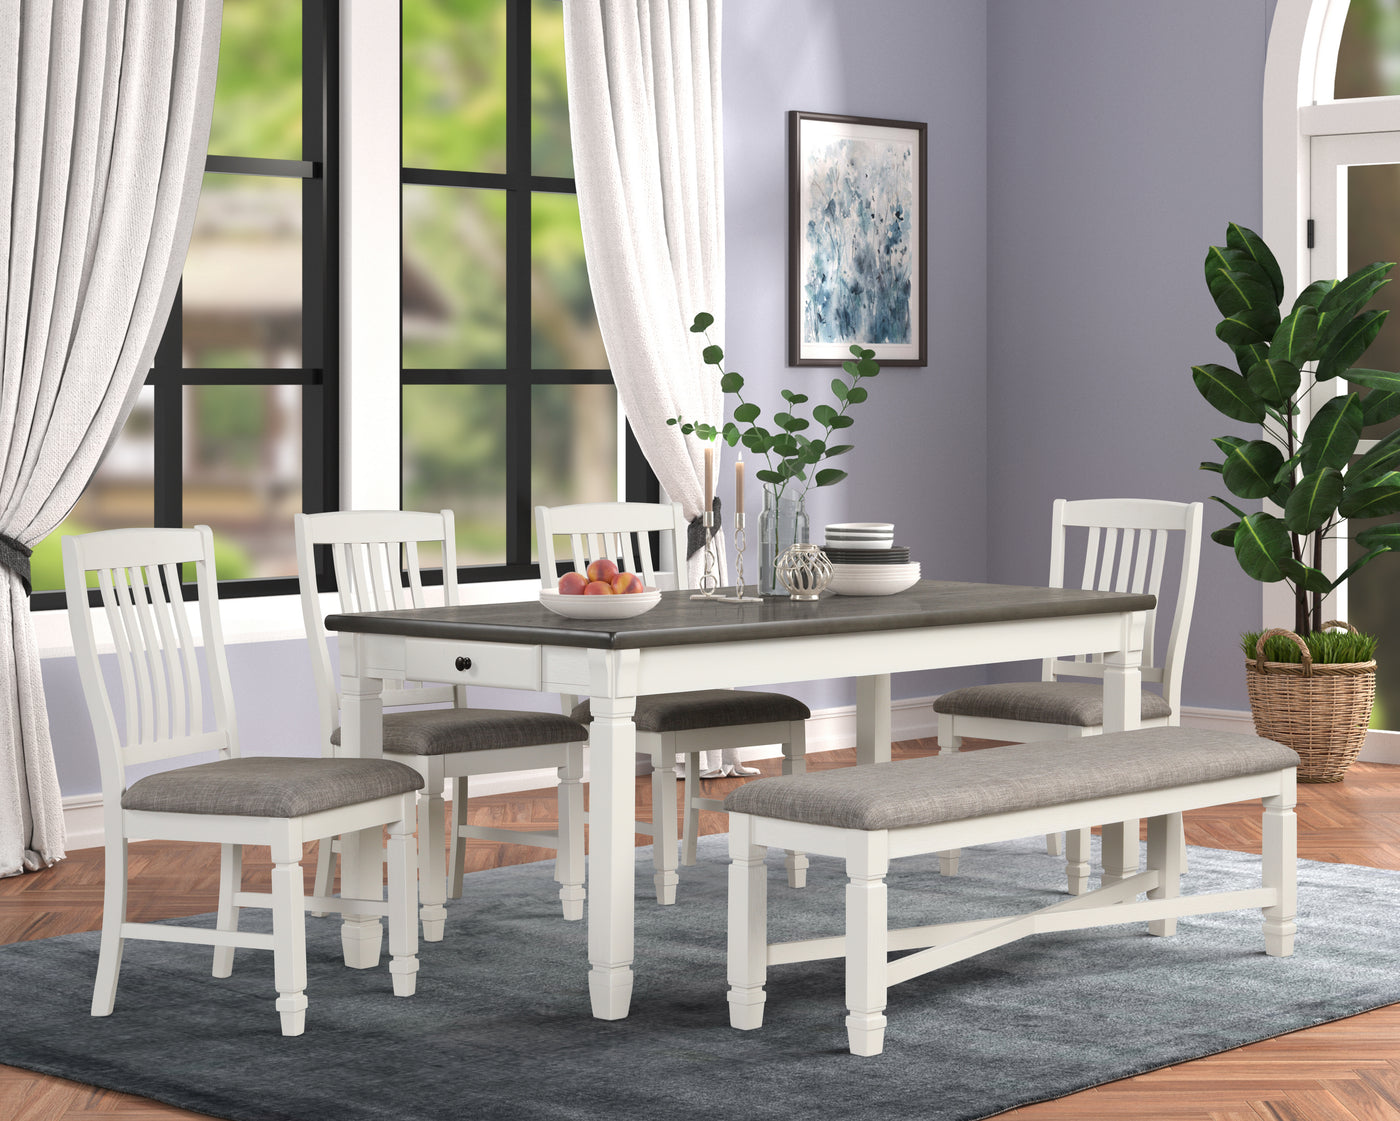 Vespera Dining Chair - White, Grey